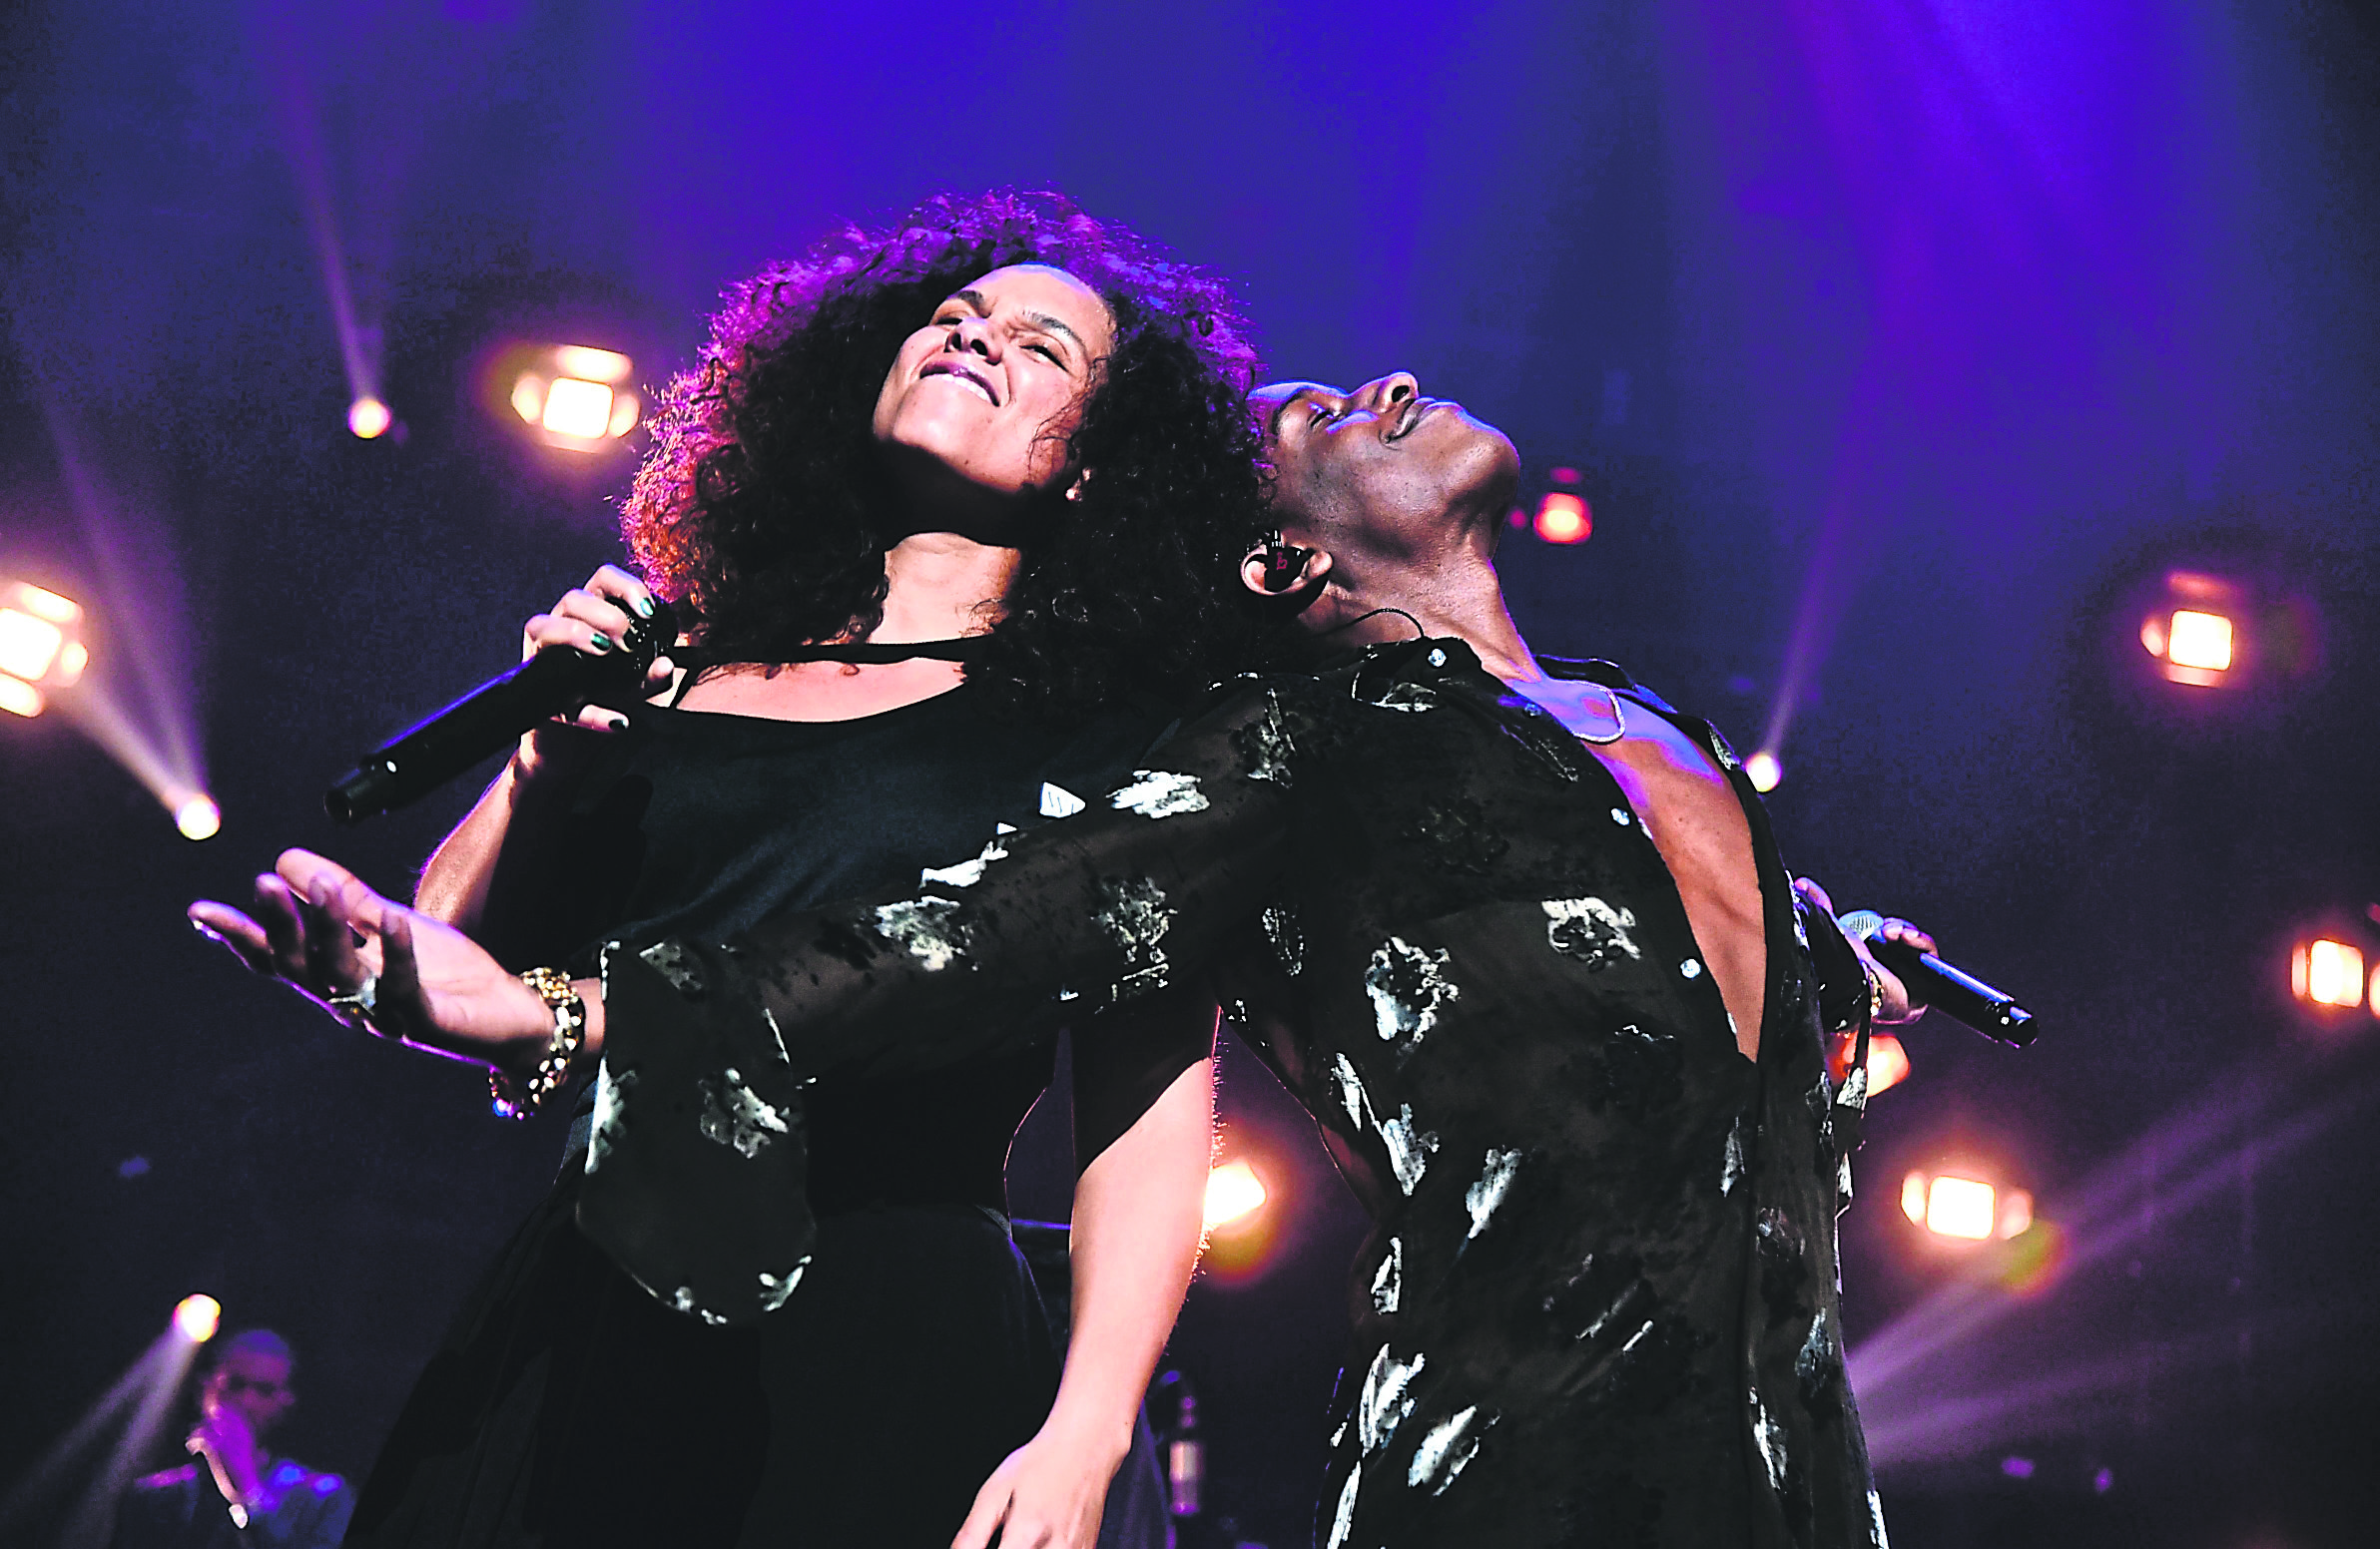 Alicia Keys bares all in new album ‘Here’